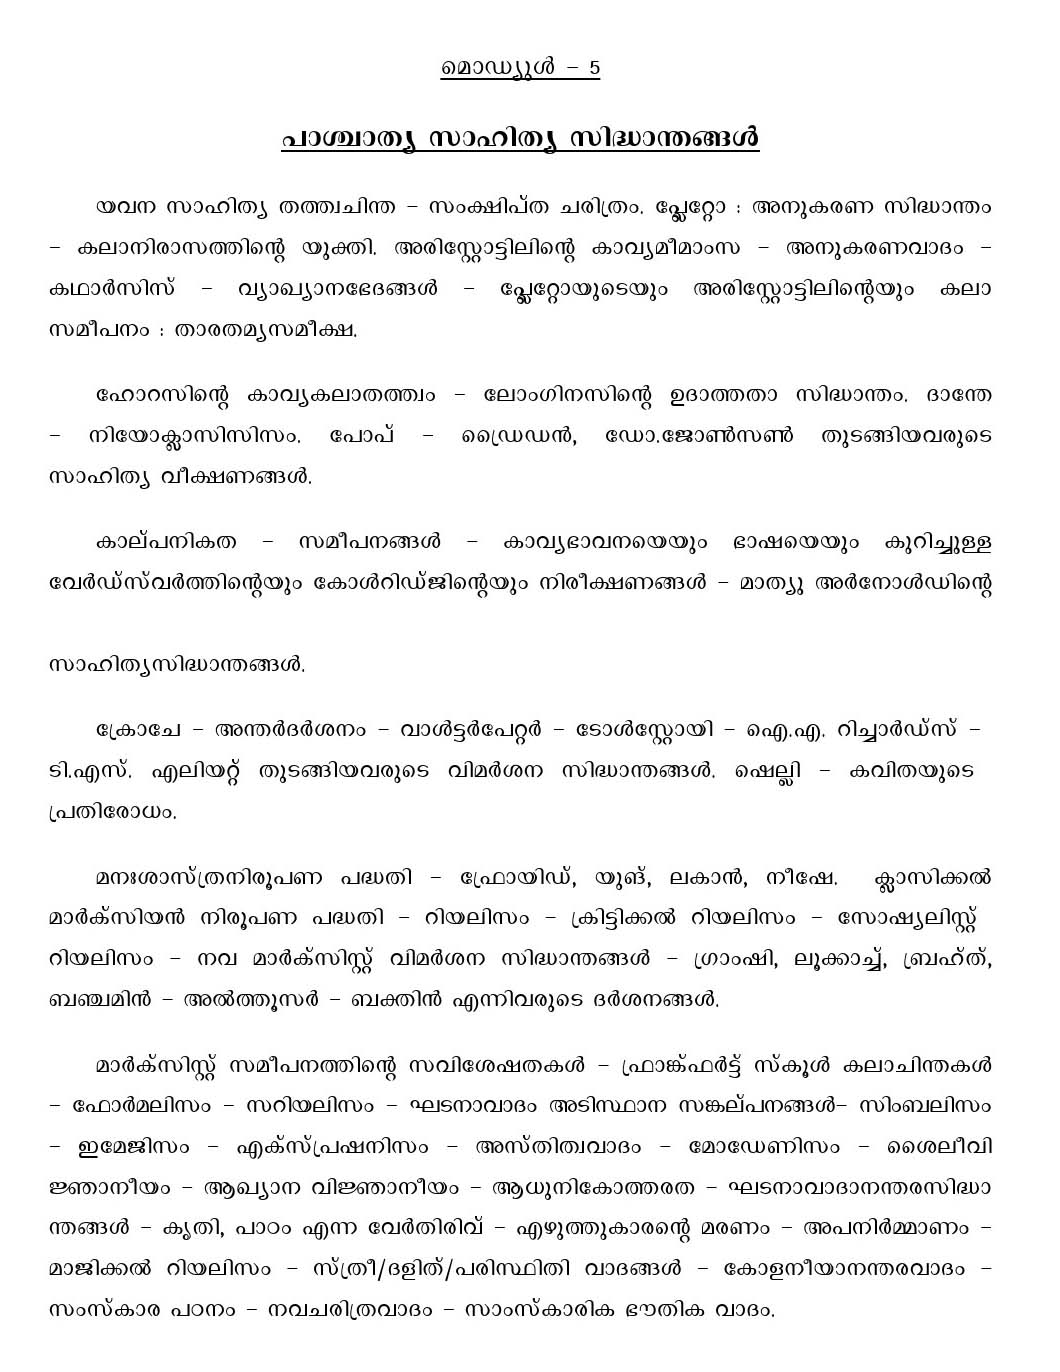 Kerala PSC Assistant Professor Malayalam Exam Syllabus - Notification Image 7